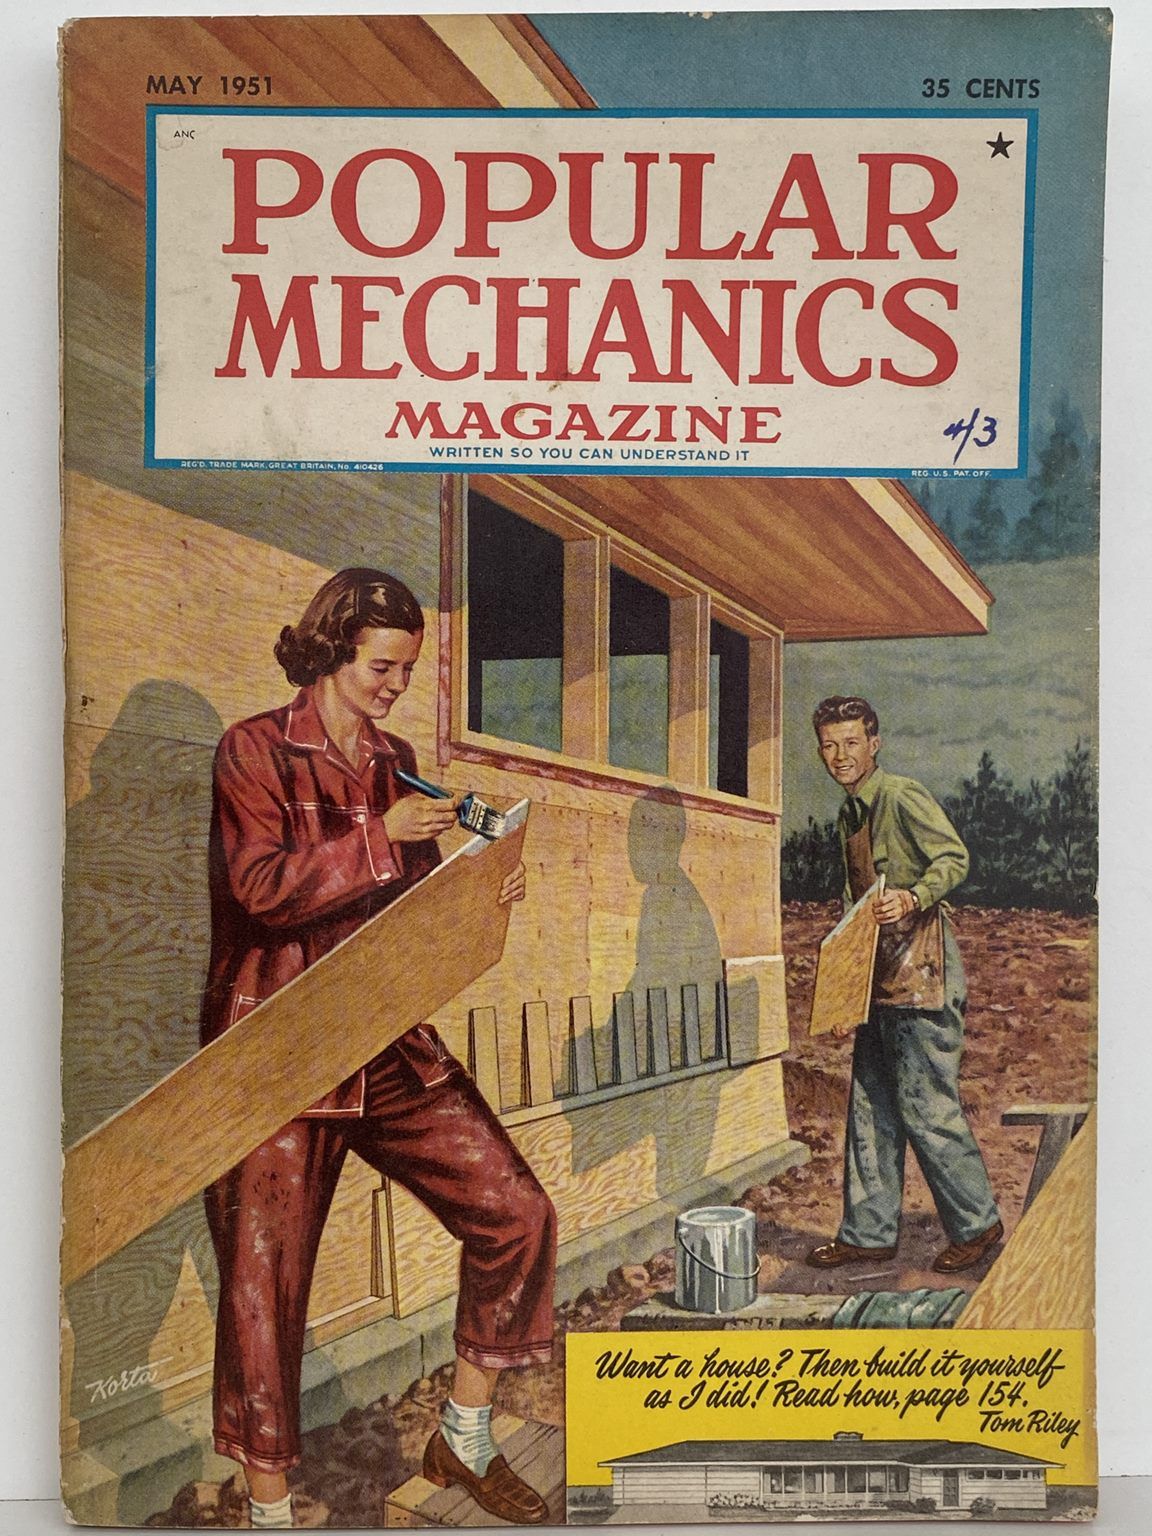 VINTAGE MAGAZINE: Popular Mechanics - Vol. 95, No. 5 - May 1951